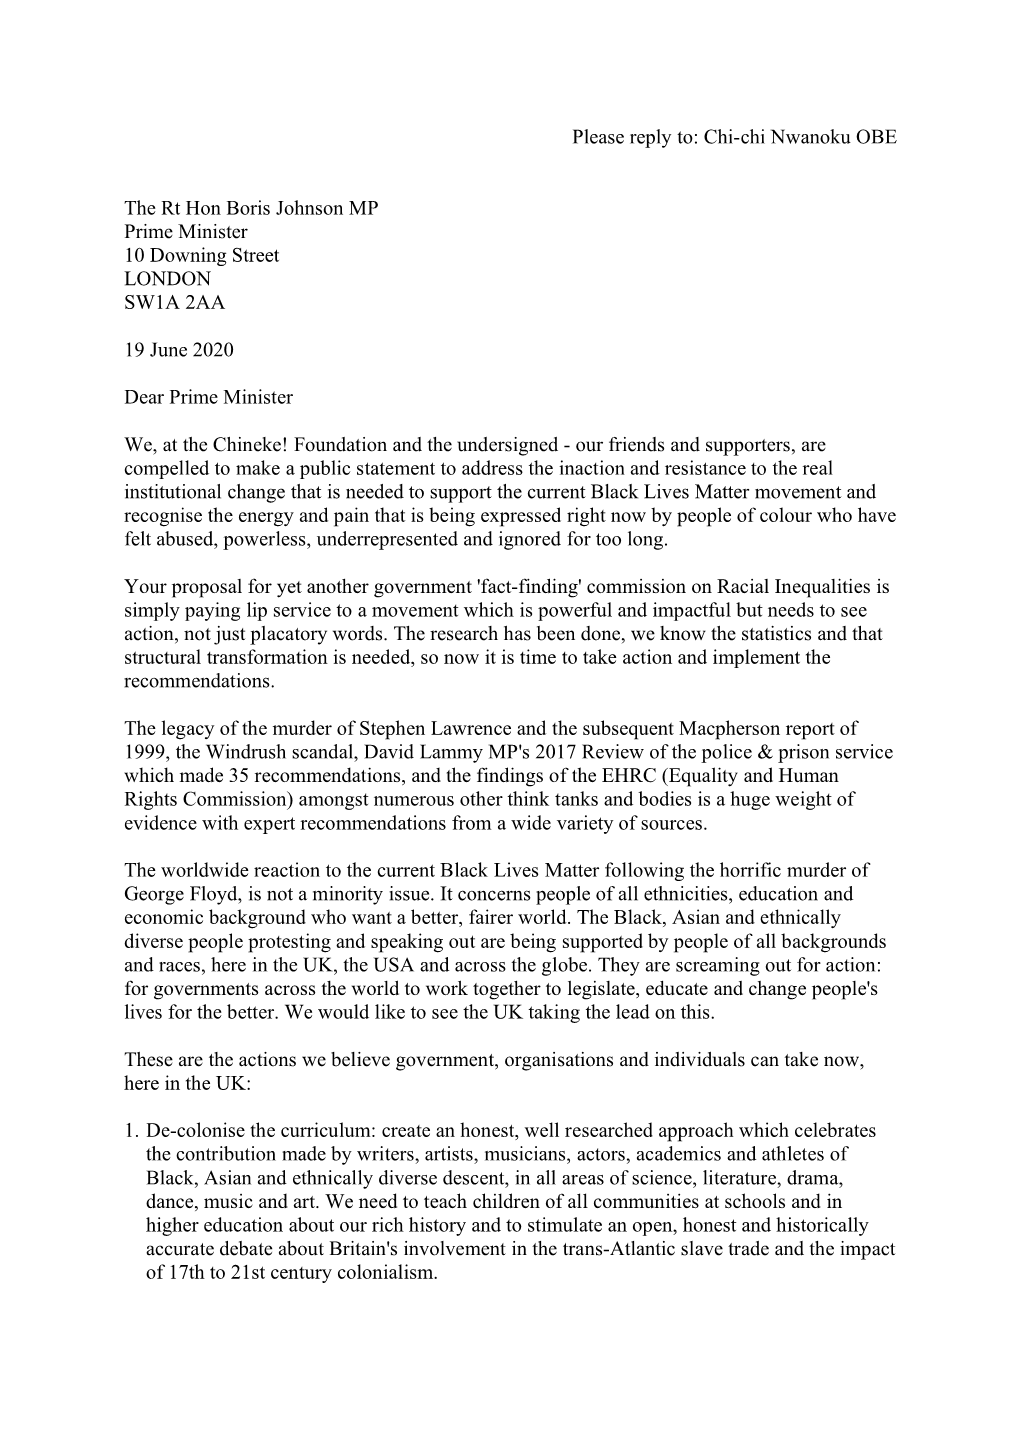 Please Reply To: Chi-Chi Nwanoku OBE the Rt Hon Boris Johnson MP